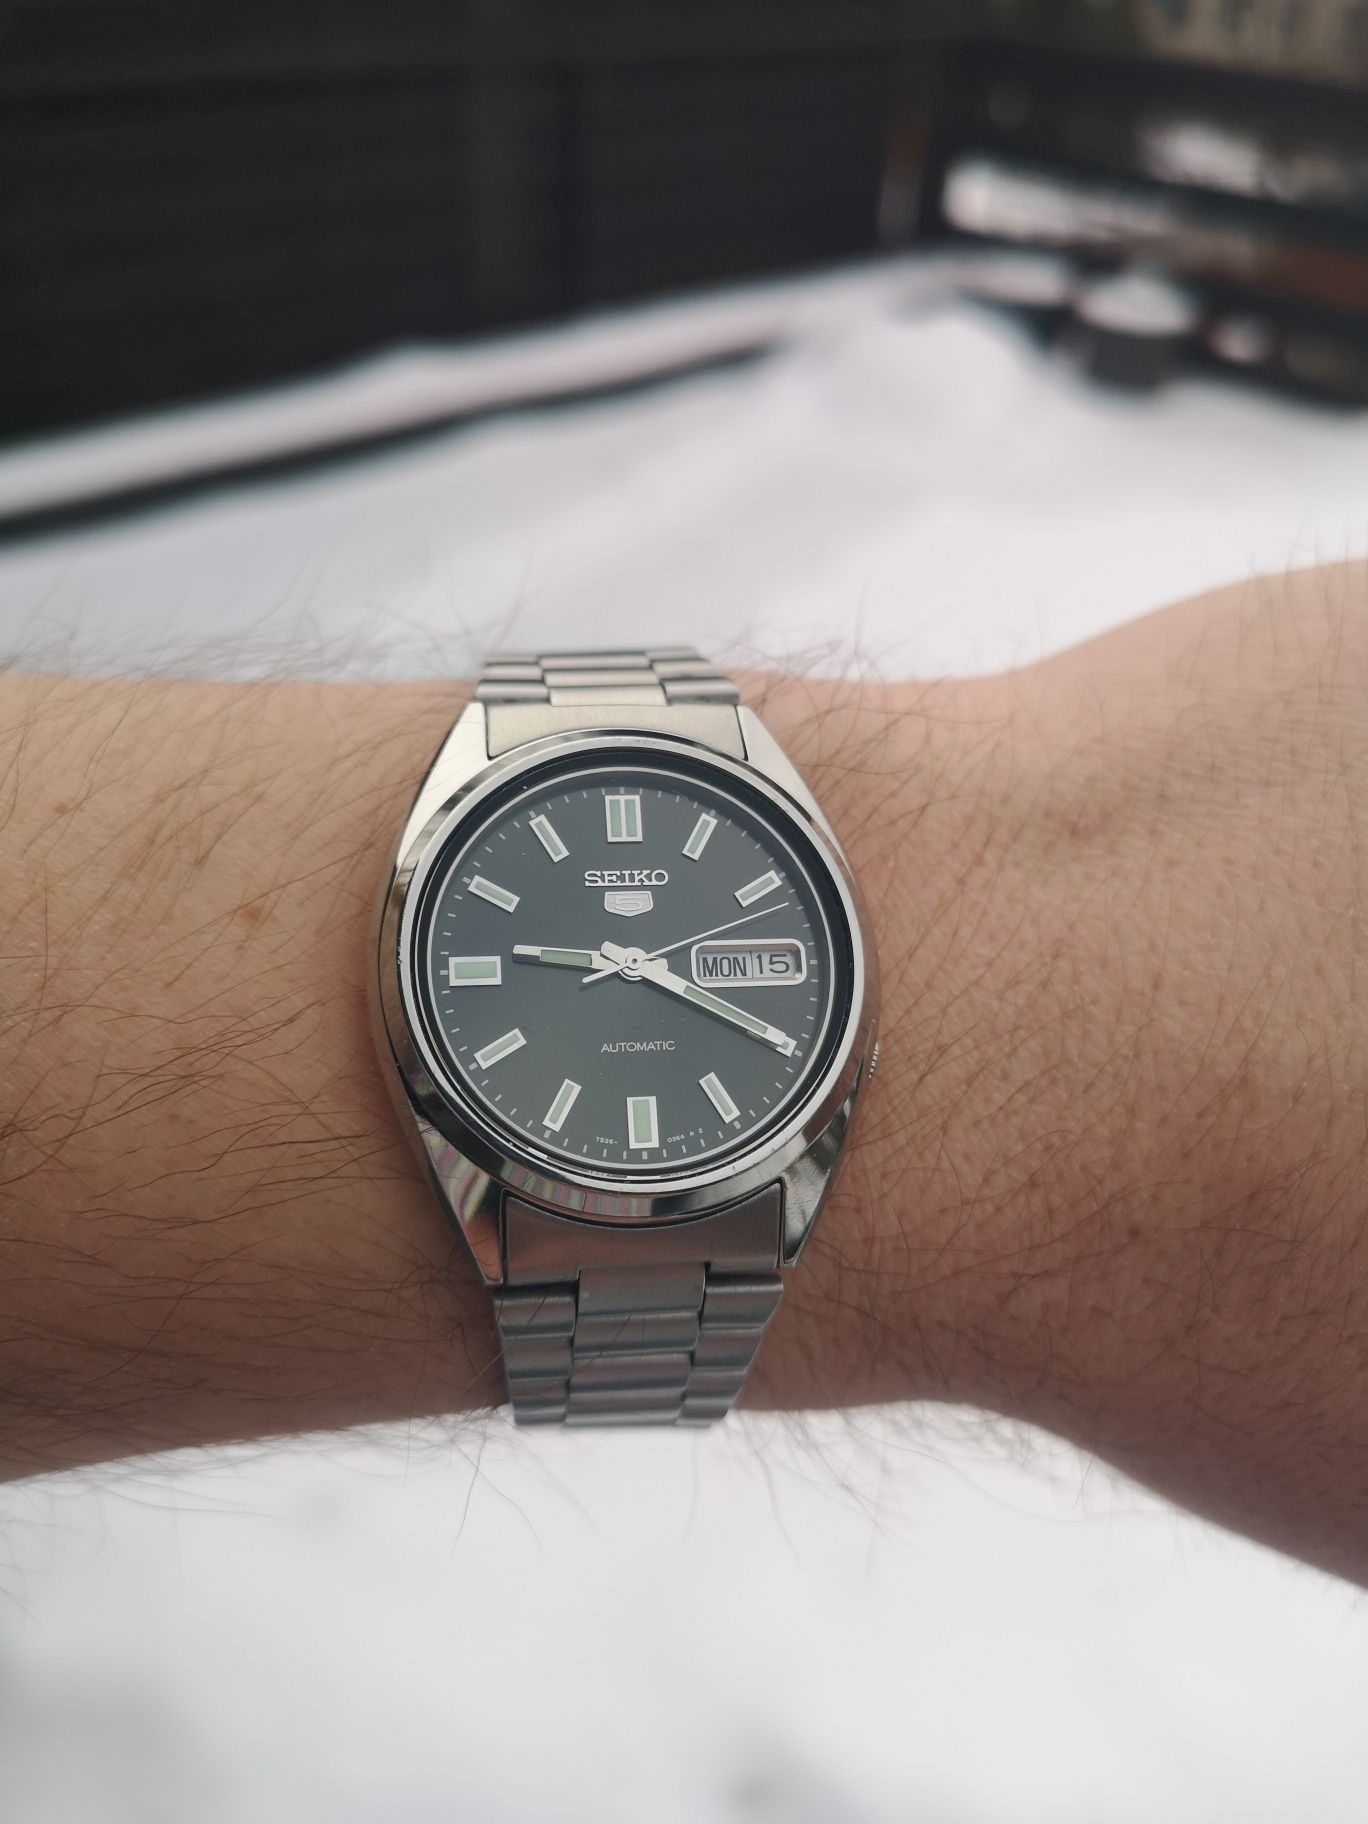 Seiko snxs 79 vintage '99 stan bdb zegarek męski nowe szkło